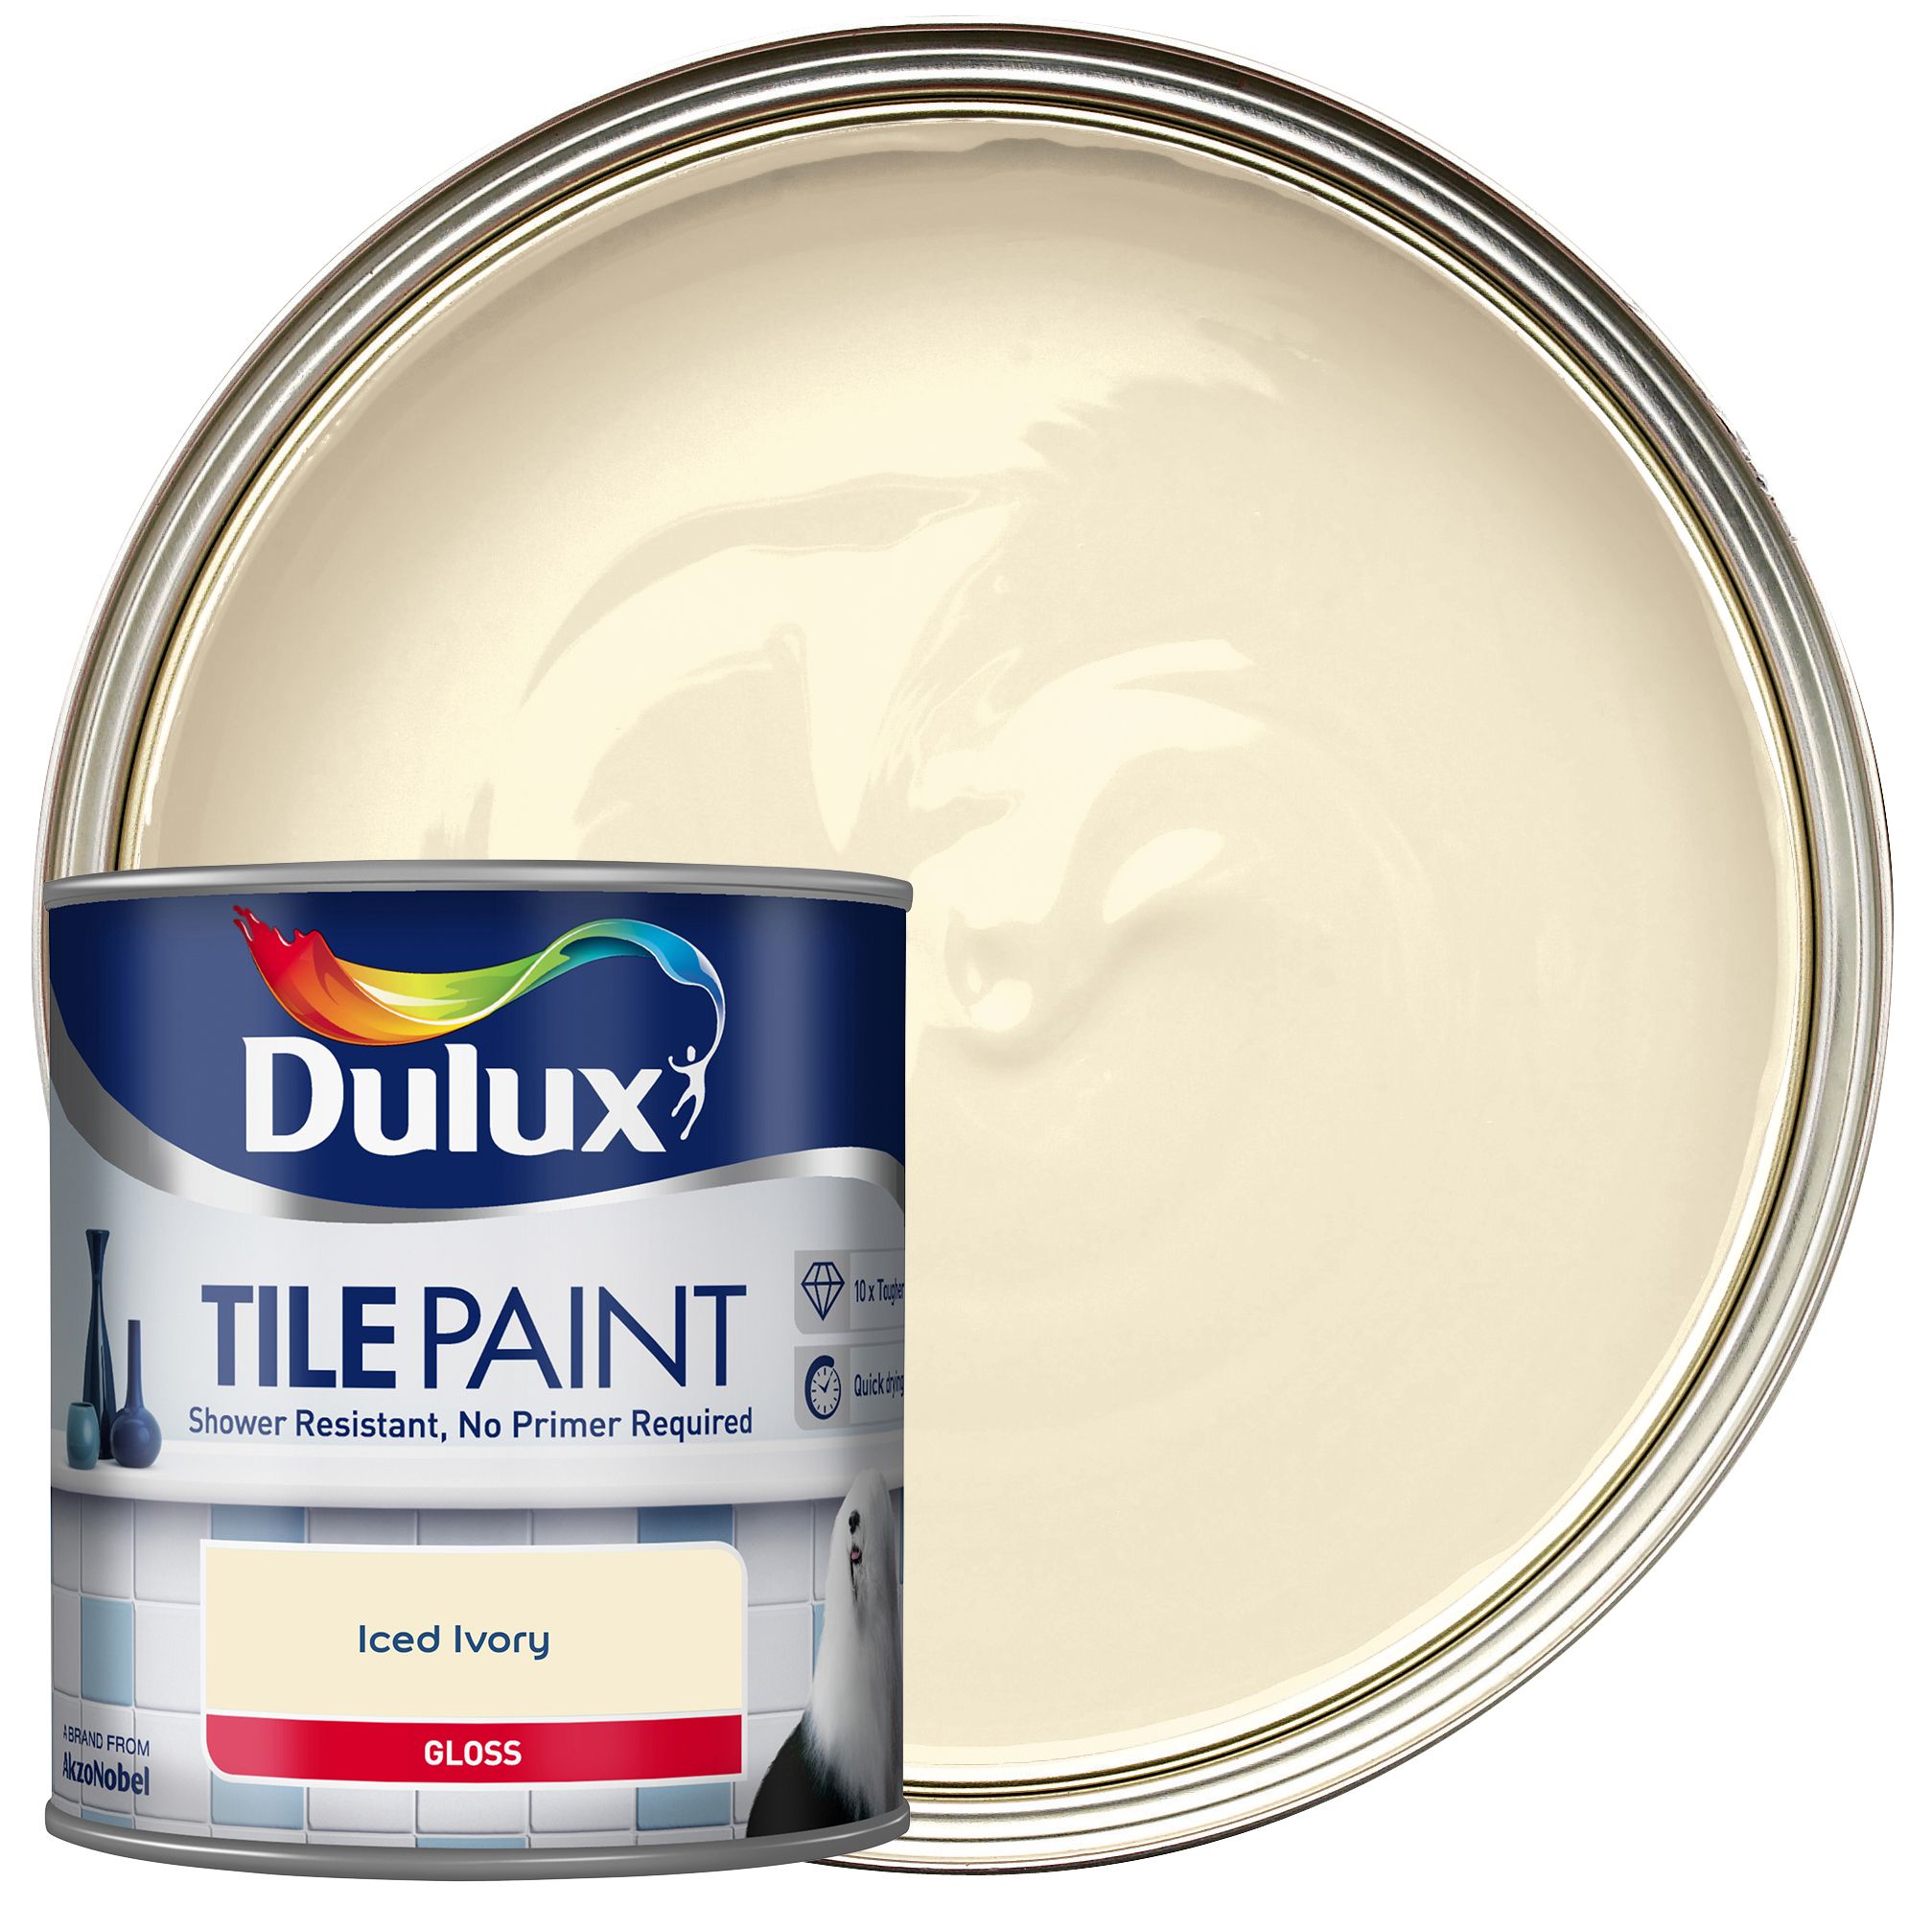 Image of Dulux Tile Paint - Iced Ivory - 600ml